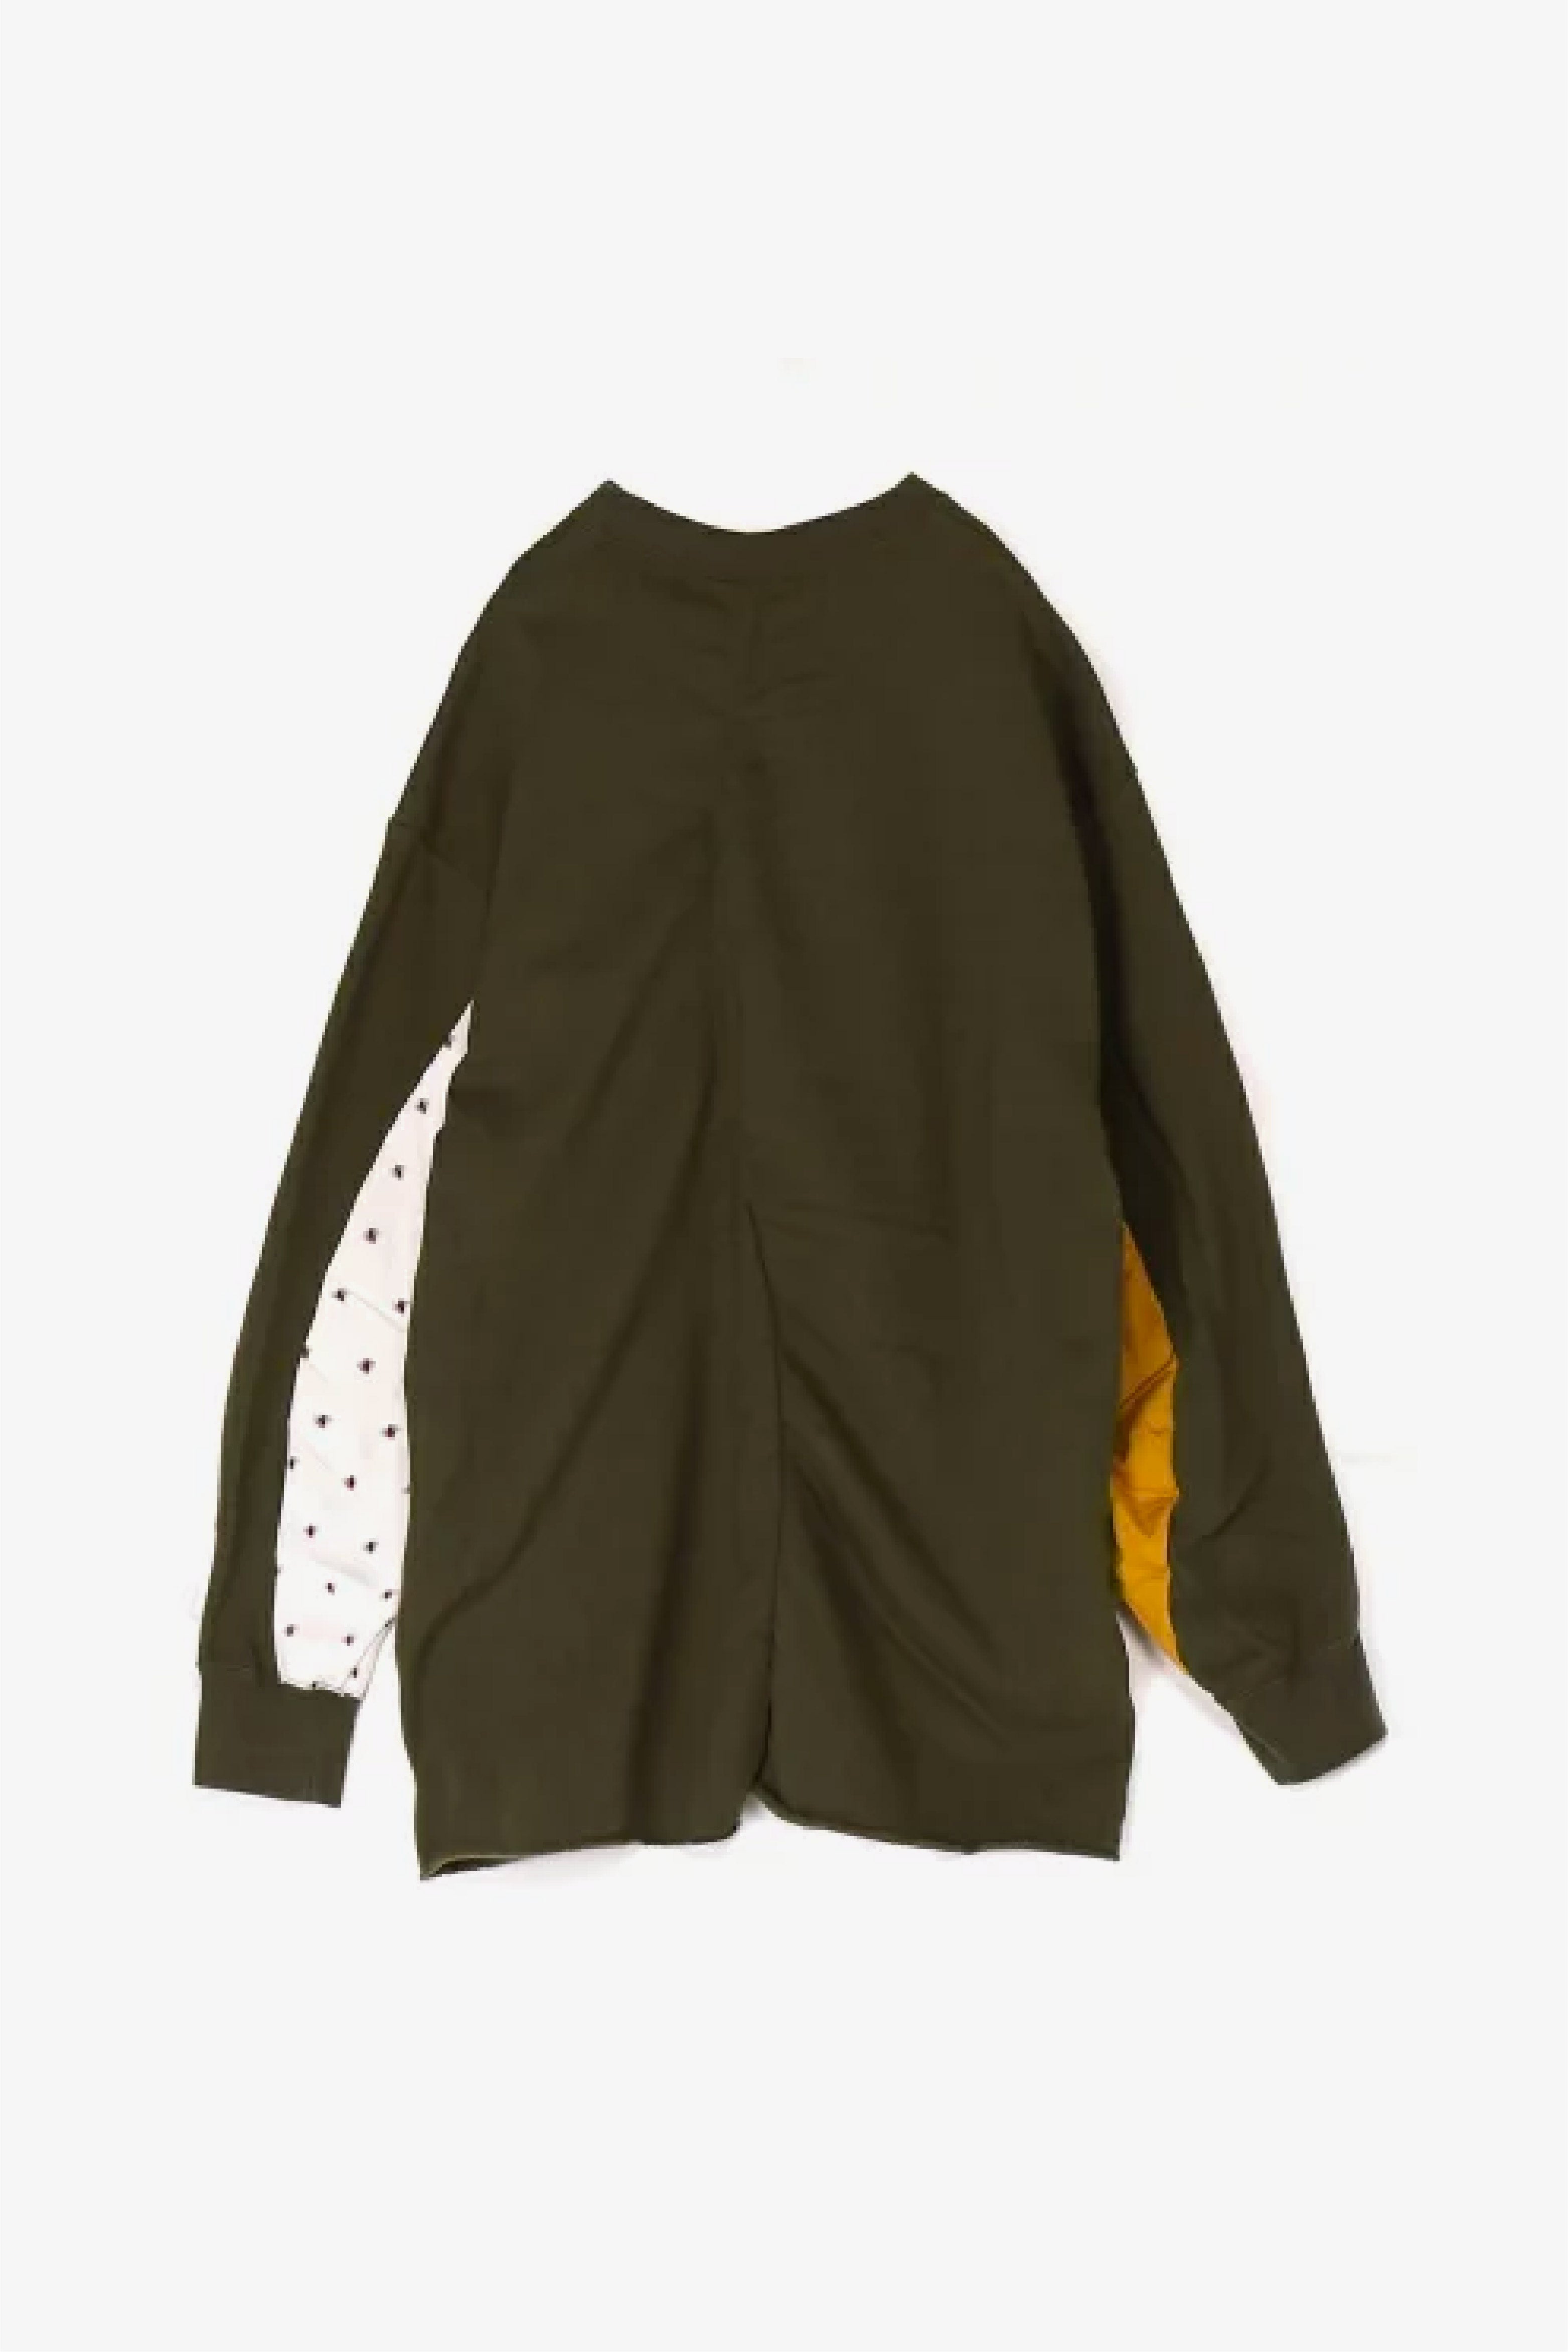 Selectshop FRAME - UNDERCOVERISM Paneled Sweatshirt Sweats-knits Dubai